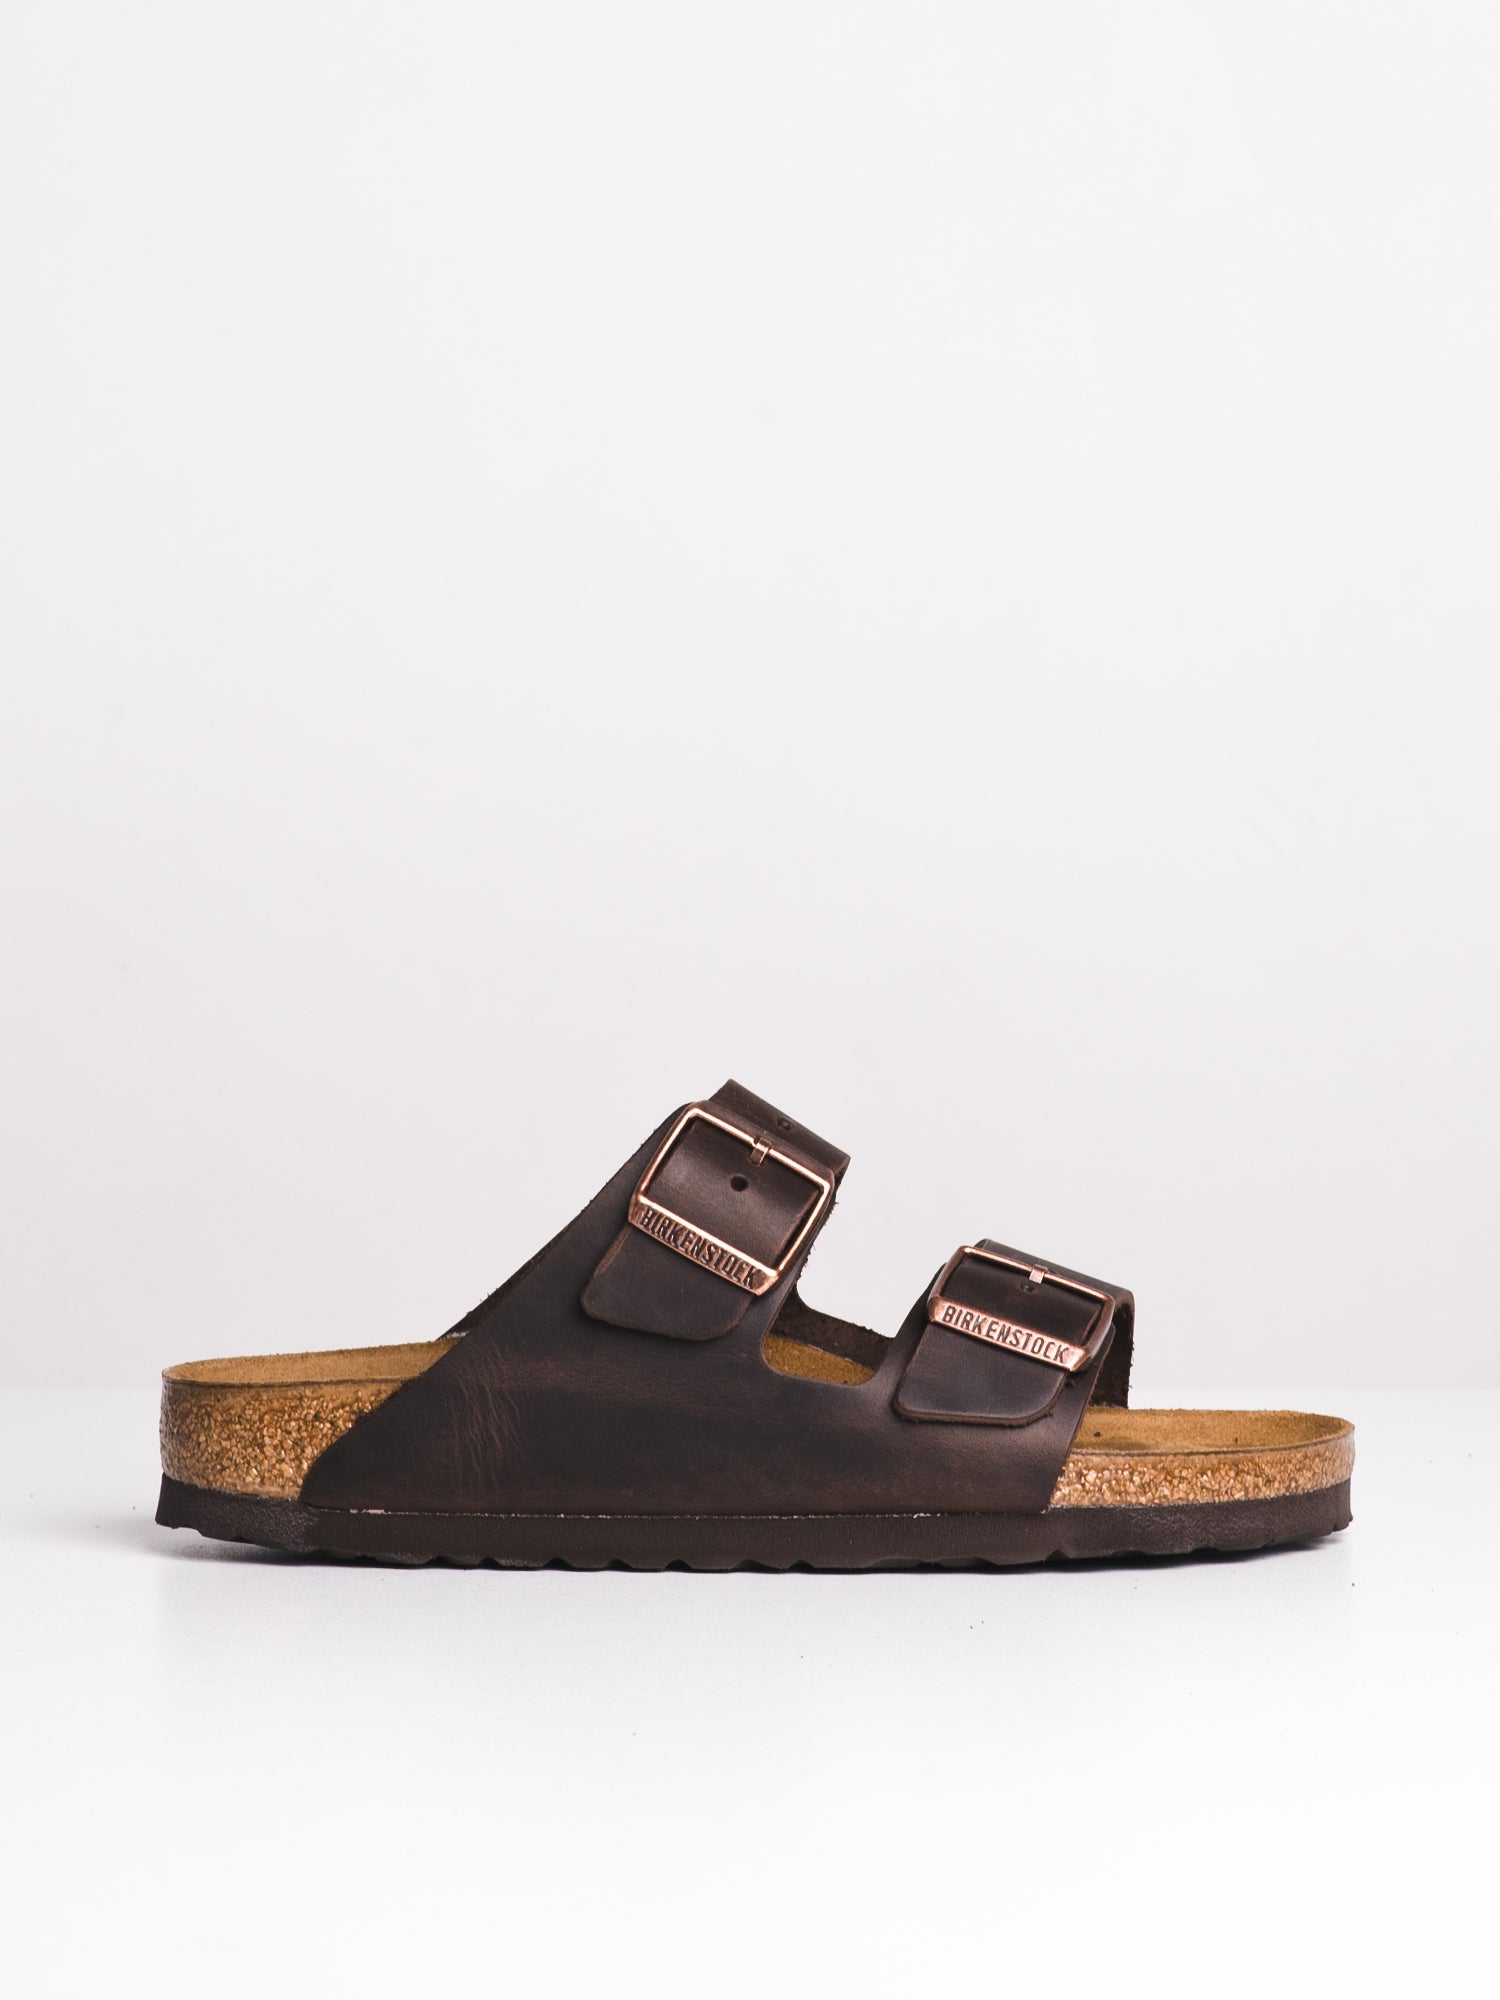 Buy the Birkenstock Men Gizeh Habana Brown Oiled Leather Sandals